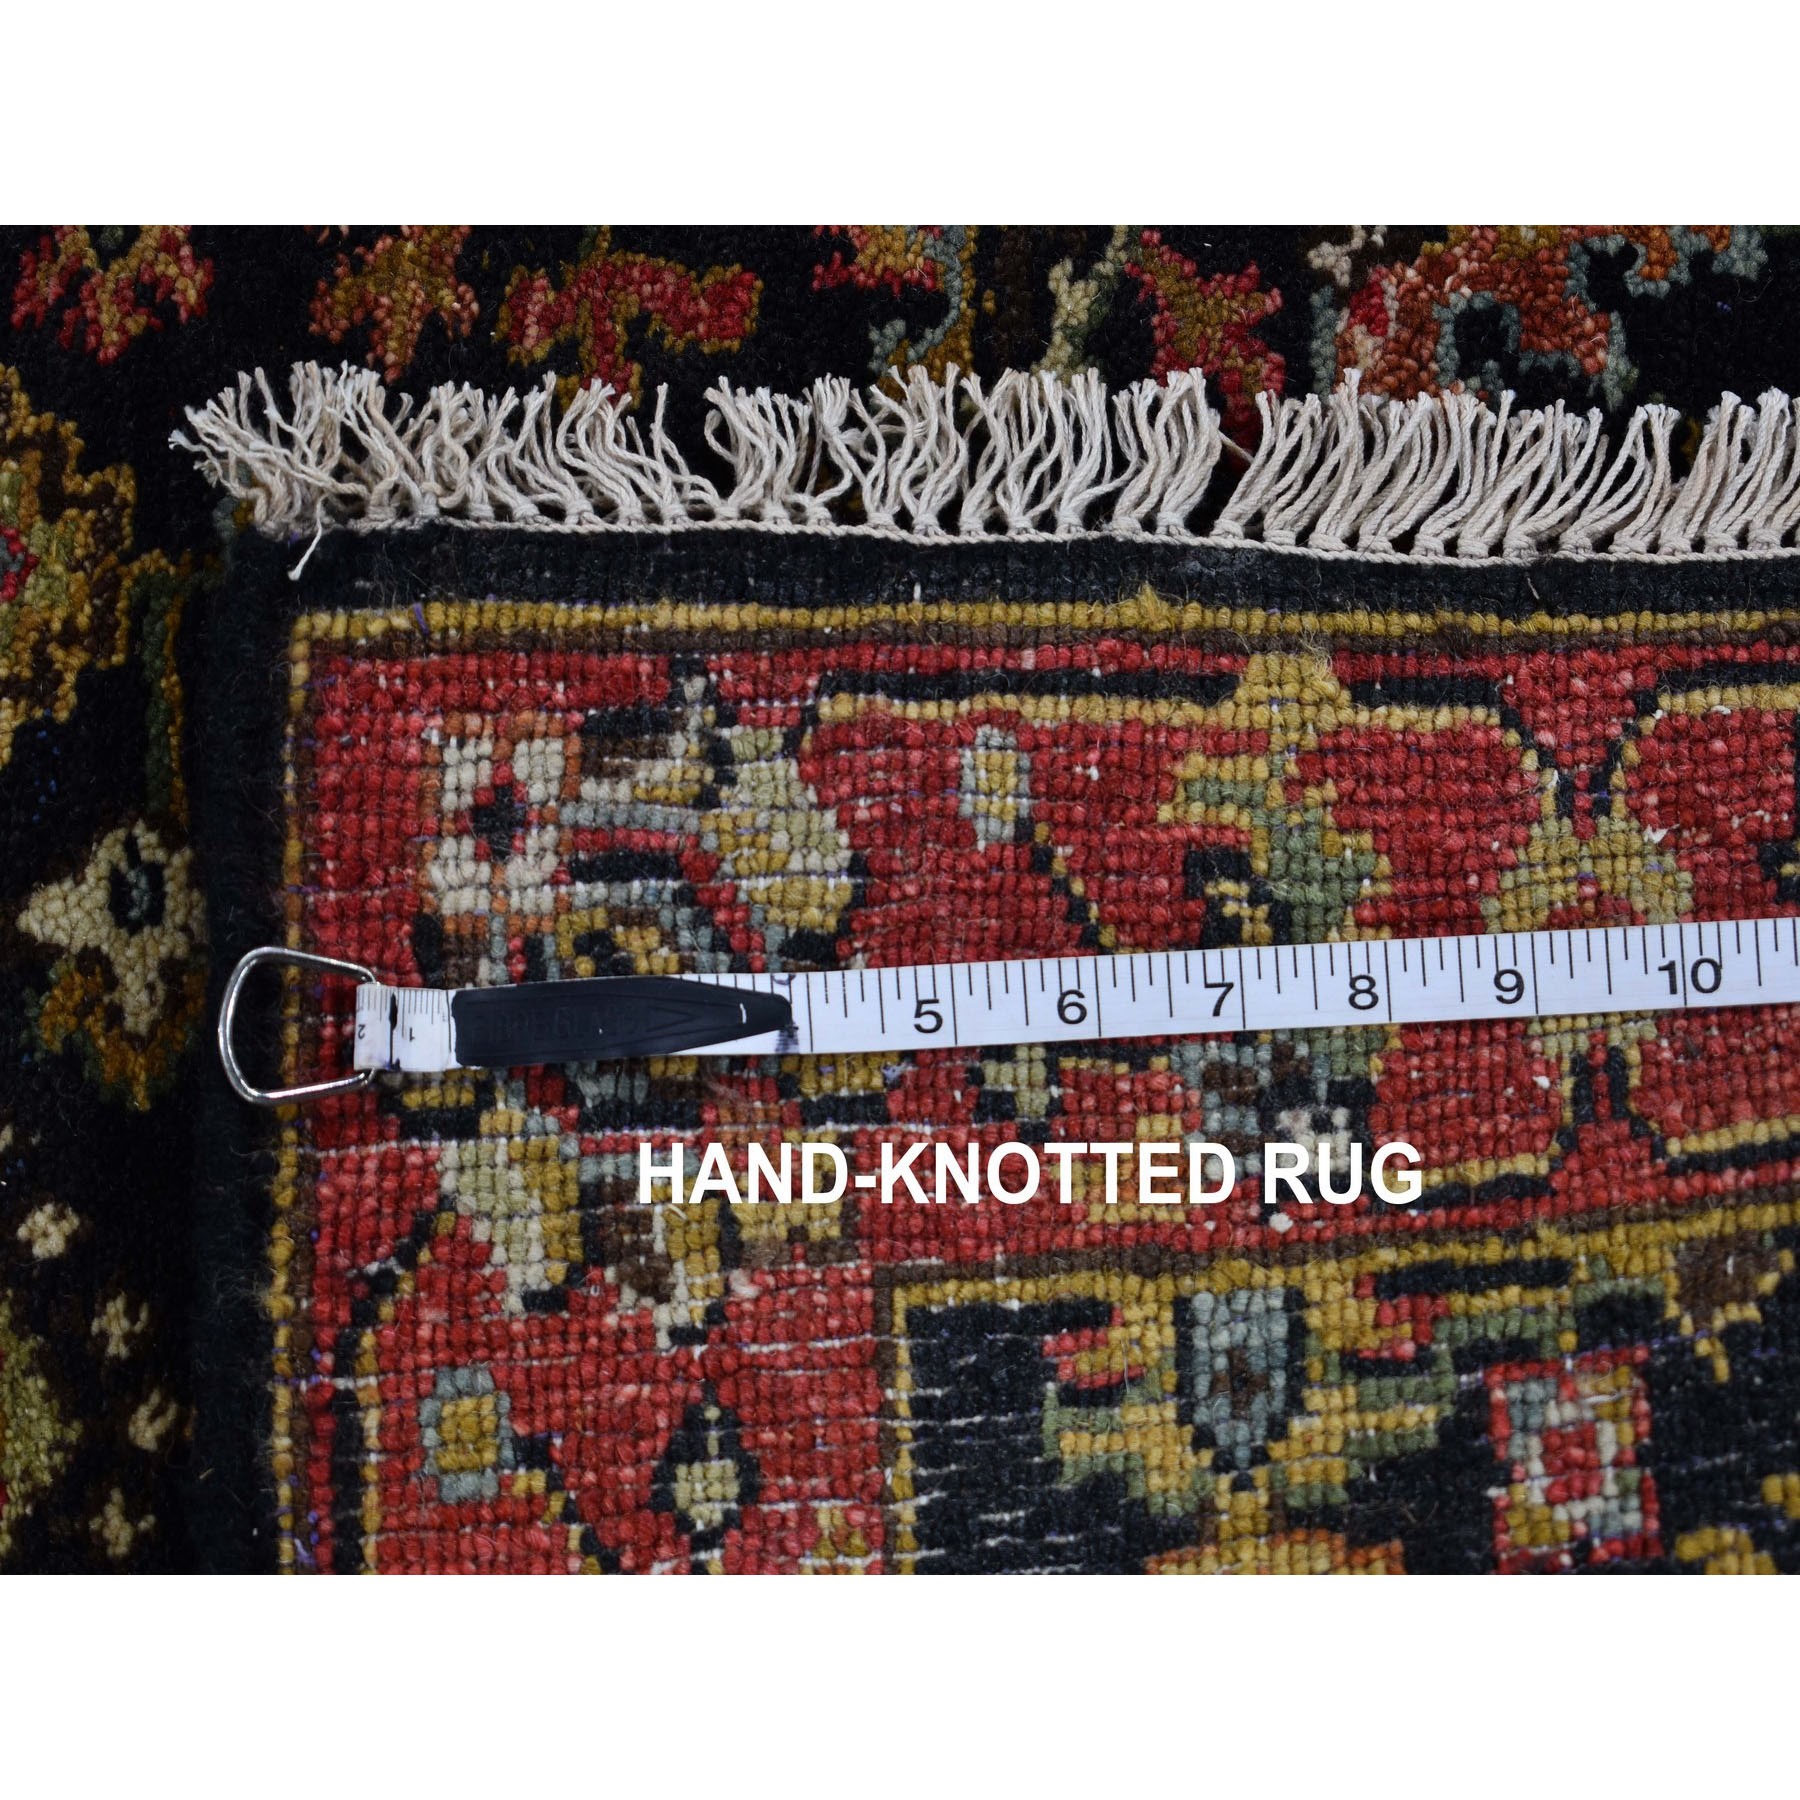 2-6 x5-10  Karajeh Design Runner Pure Wool Hand Knotted Oriental Rug 